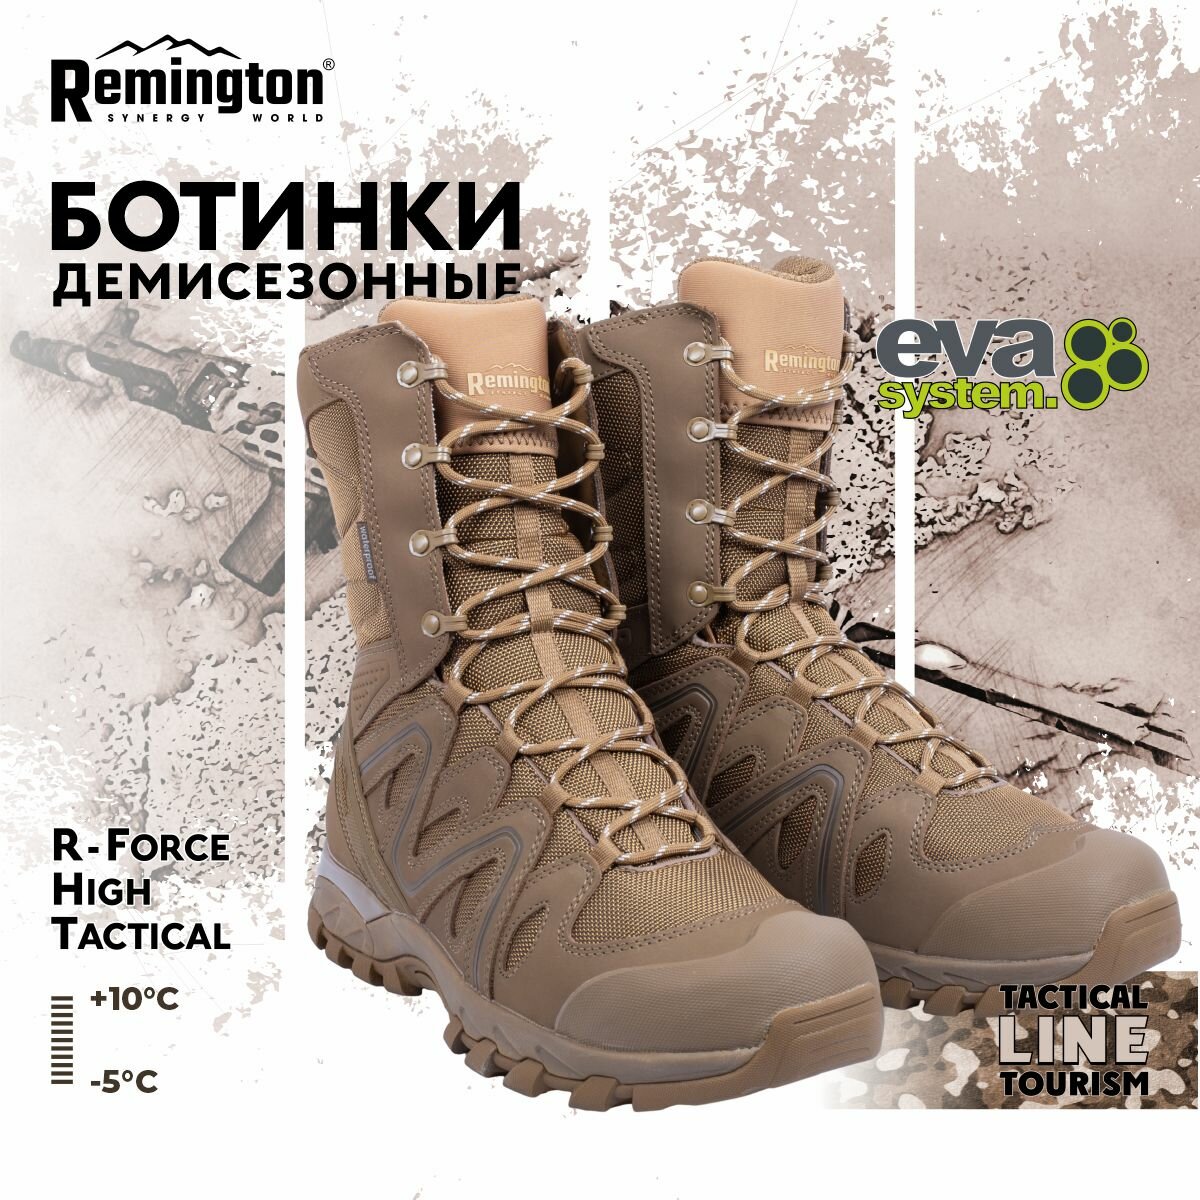 Ботинки Remington Boots R-FORCE high Tactical р. 43 RB4441-903